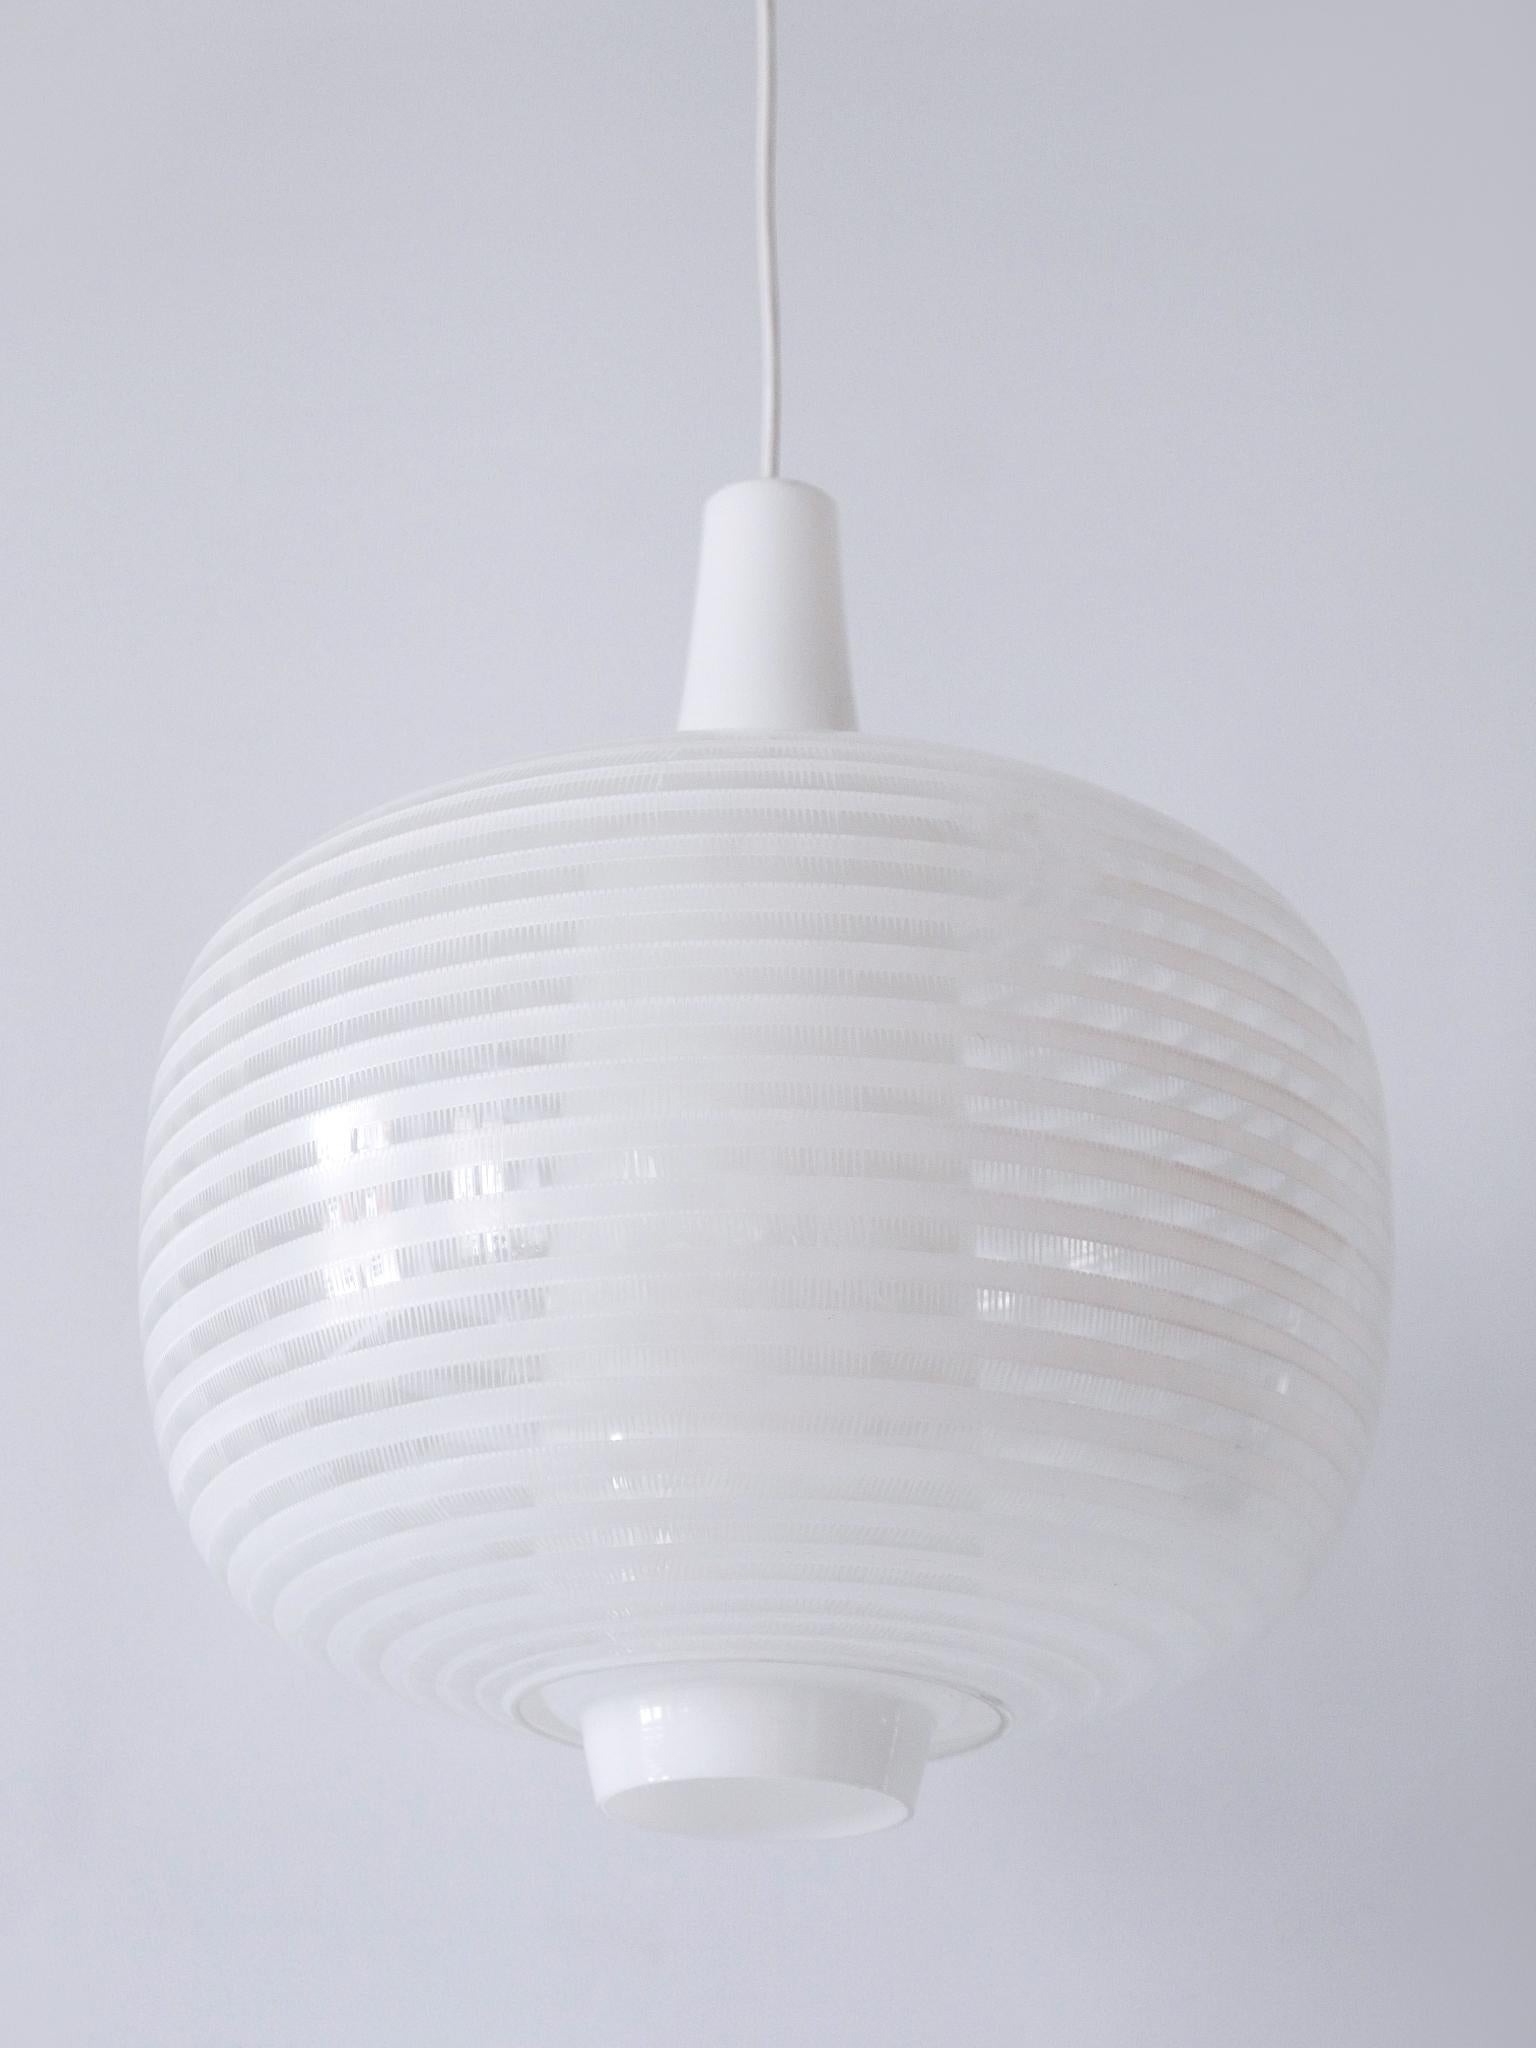 Rare & Large Mid-Century Modern Pendant Lamp Napoli by Aloys F. Gangkofner 1957 For Sale 3